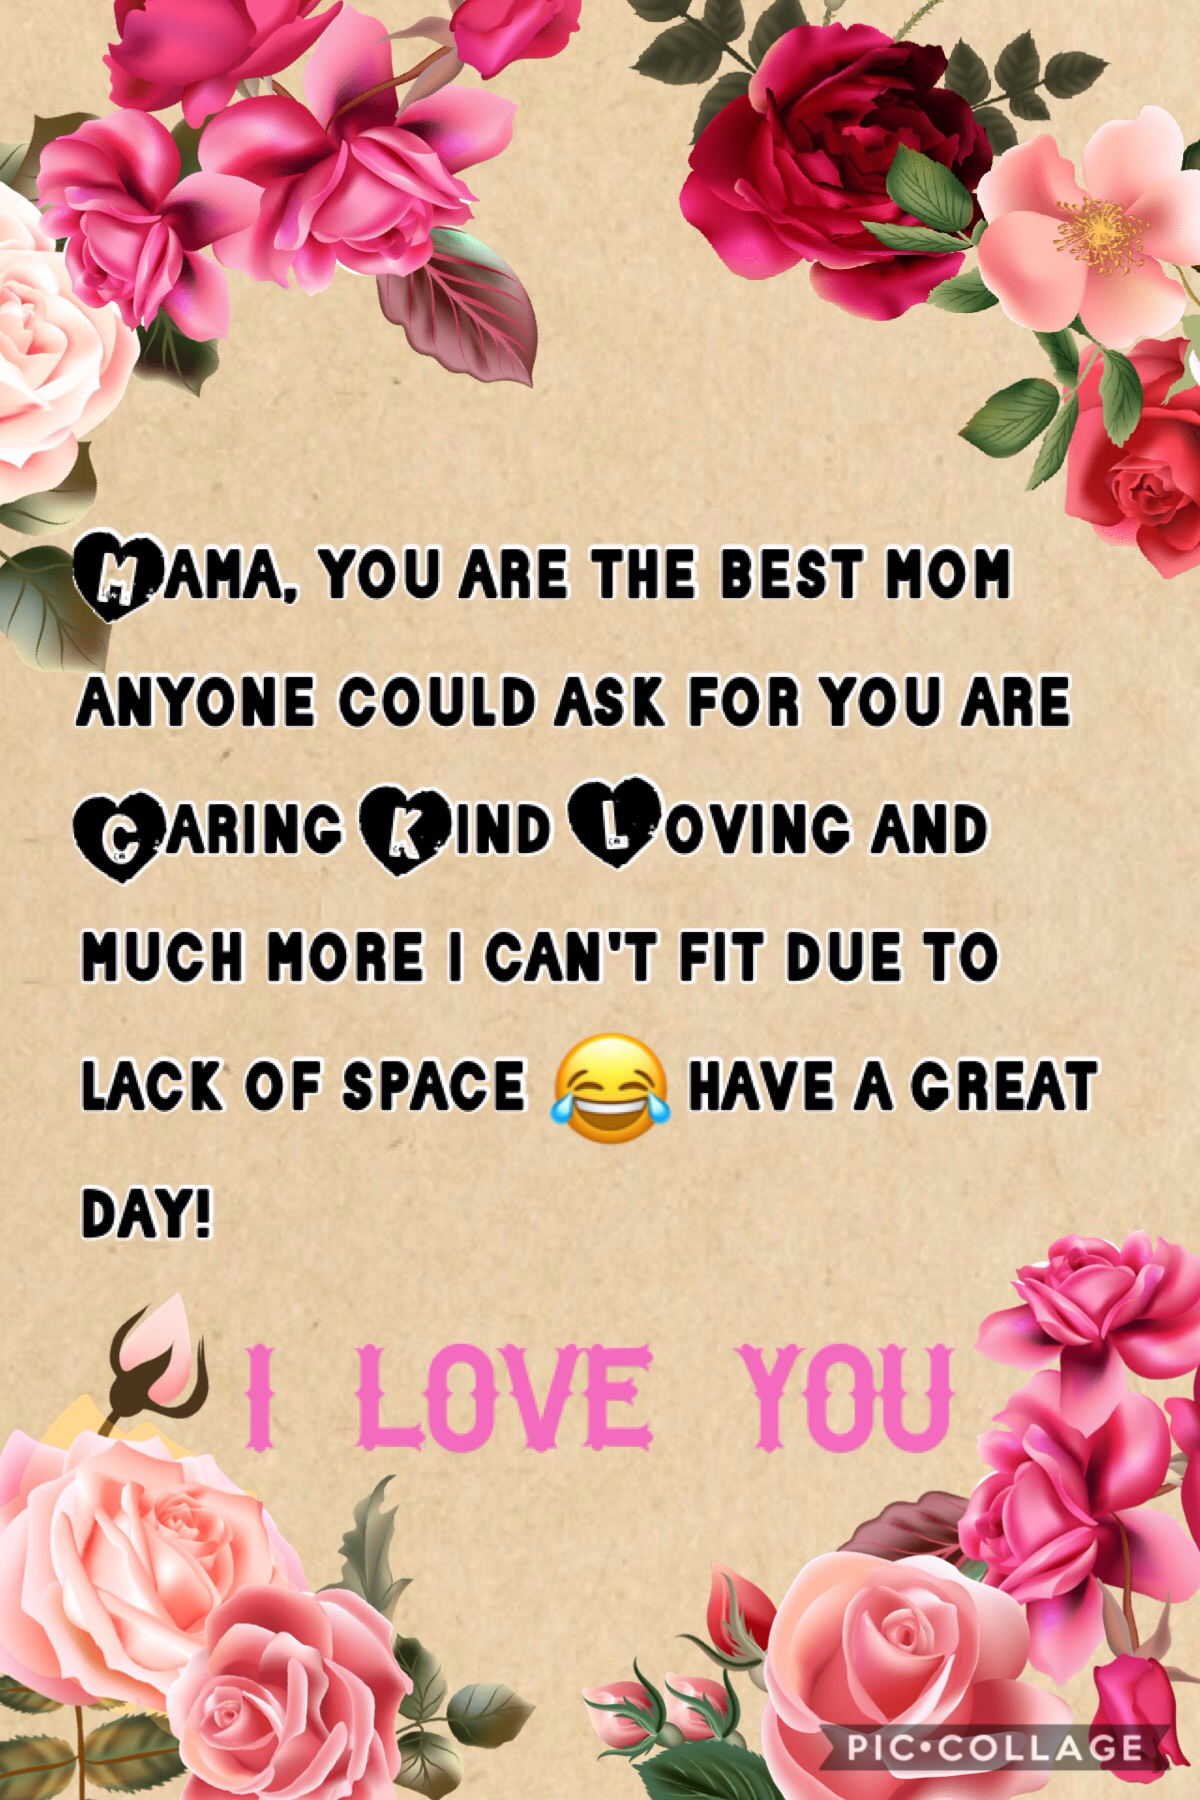 This is dedicated to my mom! ♥️ u mom!!